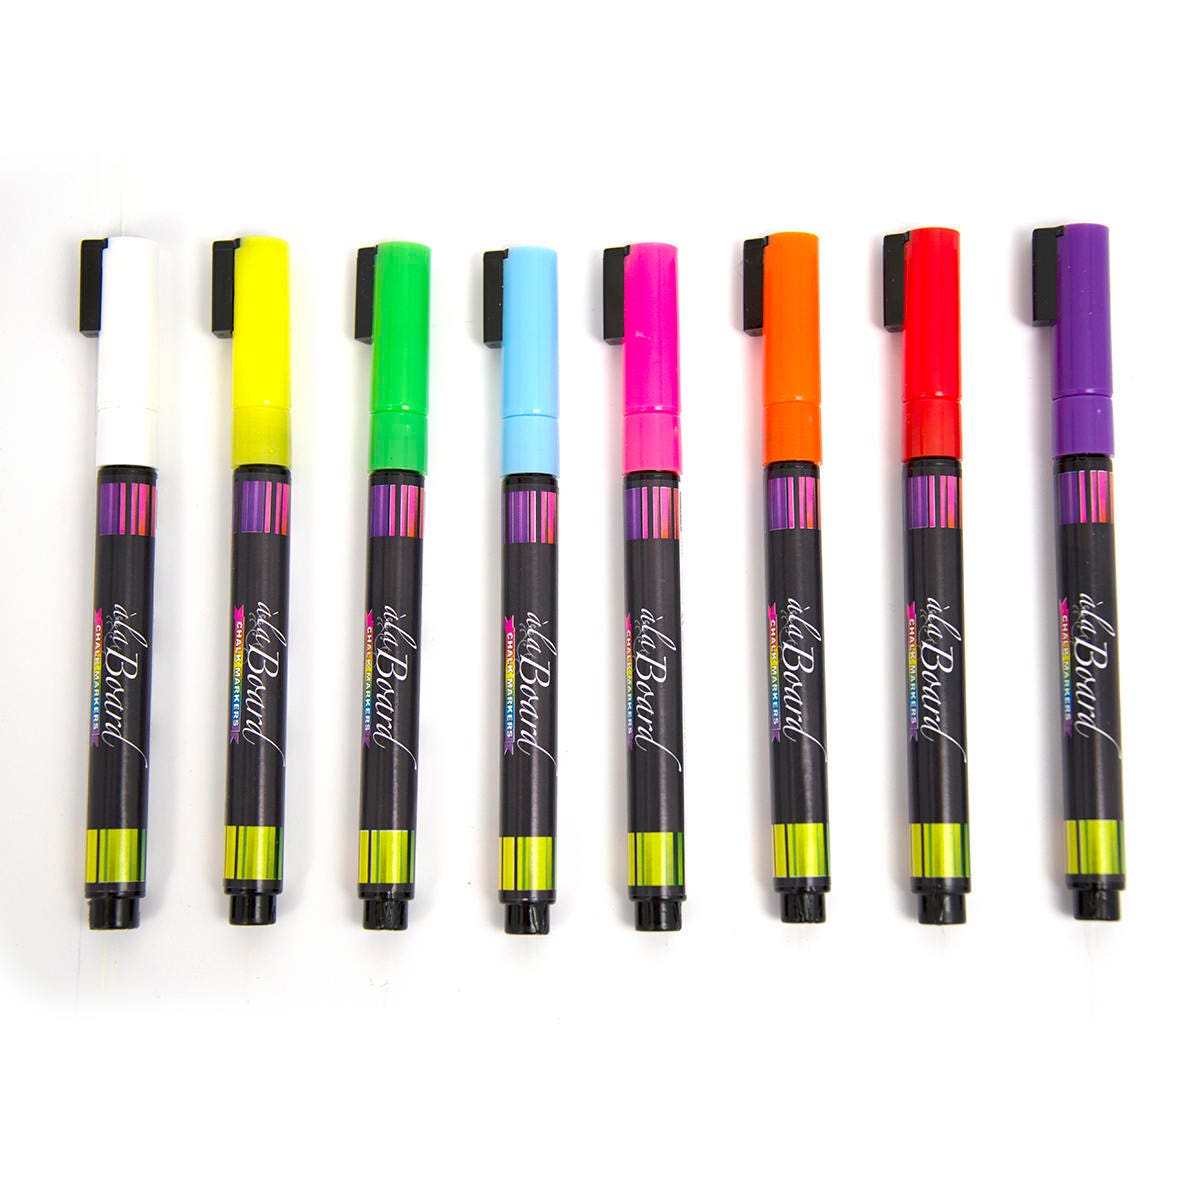 Mr. Pen- Chalk Markers, 6 Pack, Pastel Colors, 8 Labels, Chalkboard Markers, Liquid Chalk Markers, Chalk Markers for Chalkboa